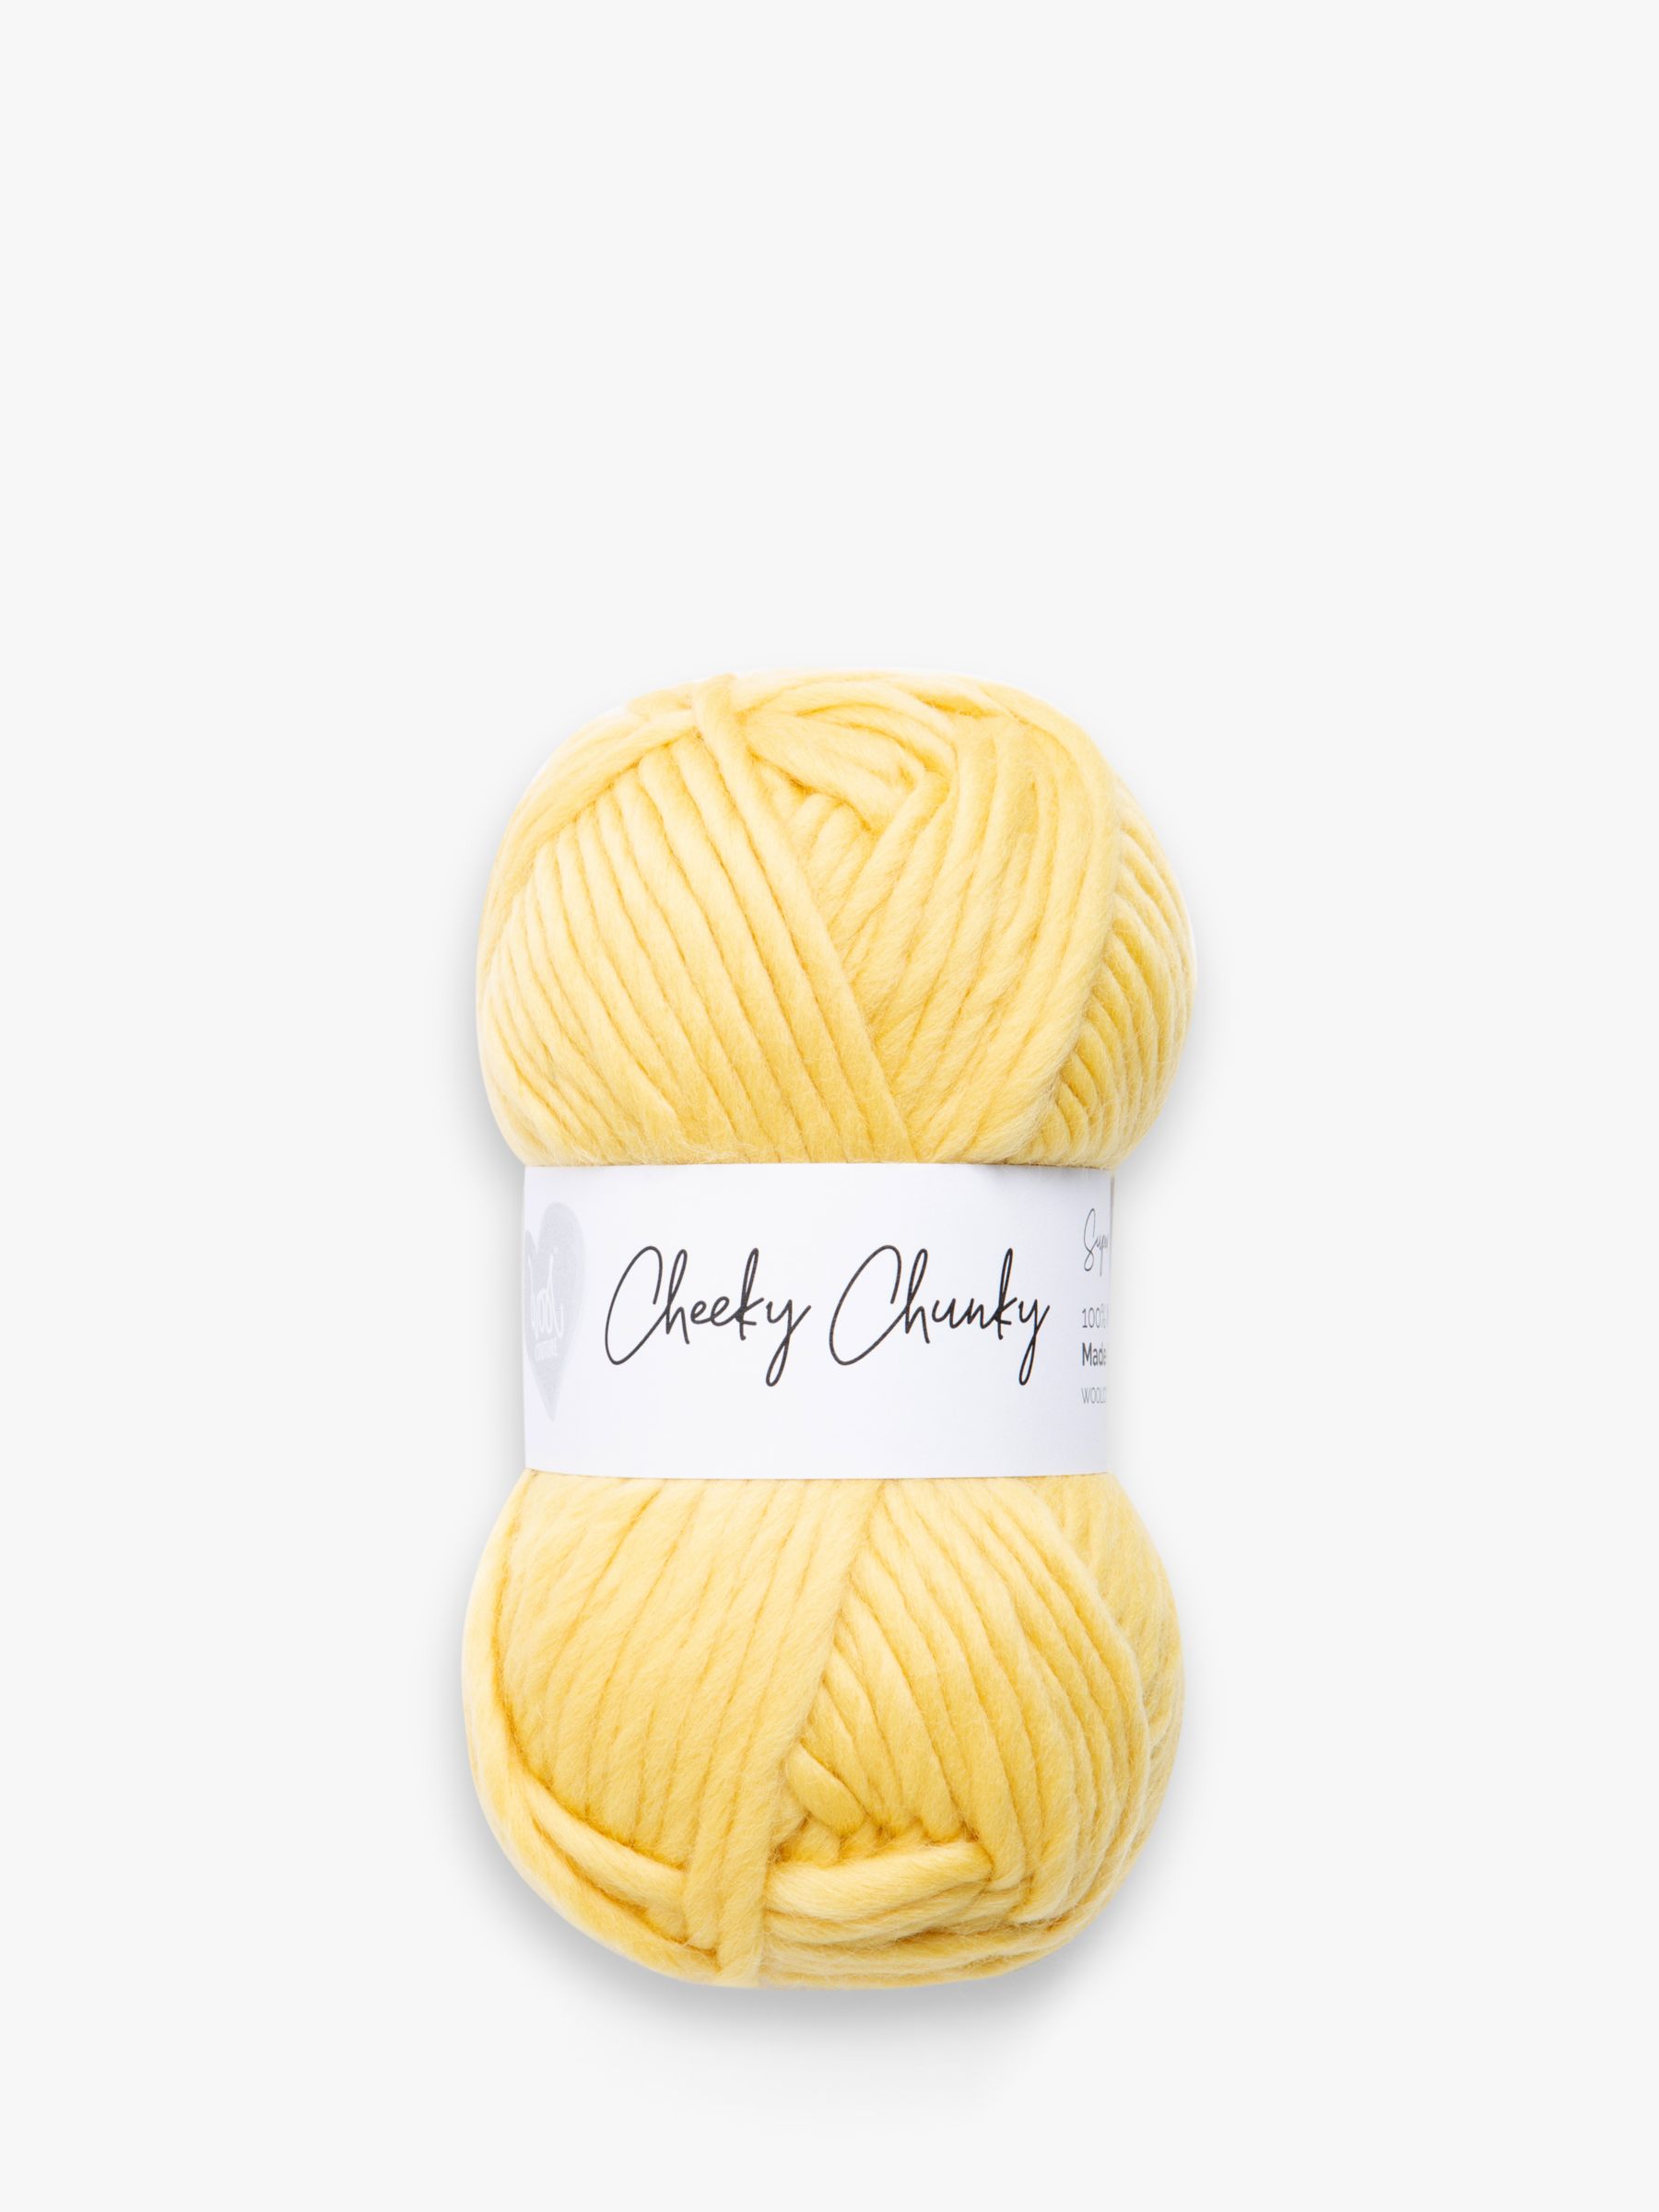 Mustard Super Chunky Yarn. Cheeky Chunky Yarn by Wool Couture